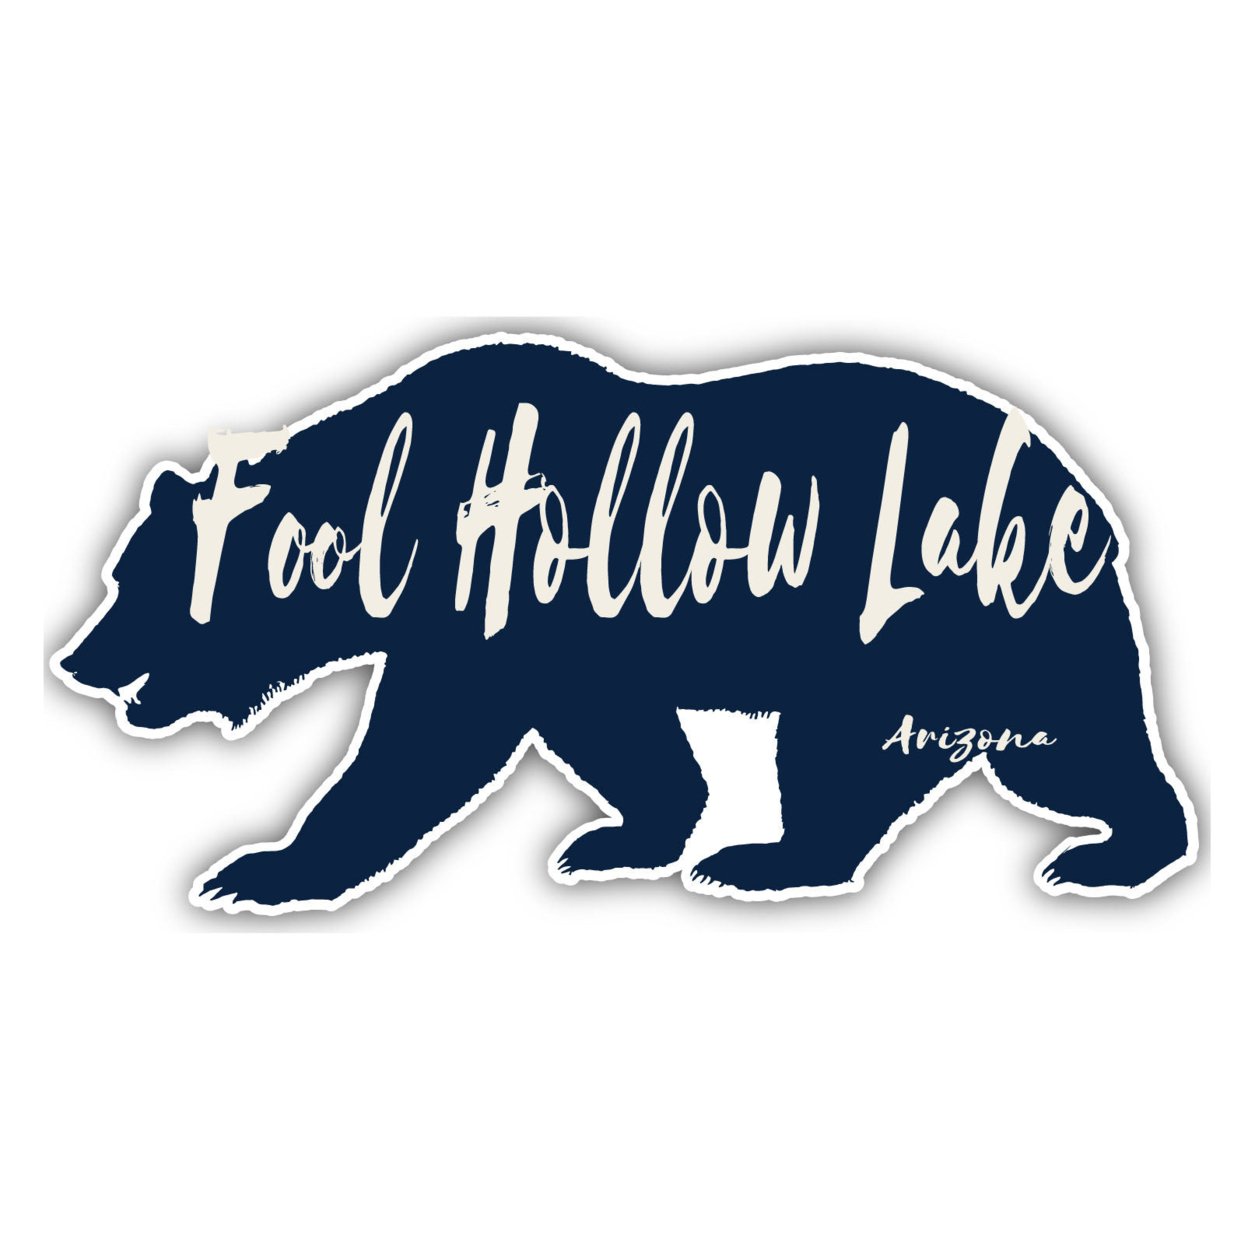 Fool Hollow Lake Arizona Souvenir Decorative Stickers (Choose Theme And Size) - Single Unit, 6-Inch, Camp Life